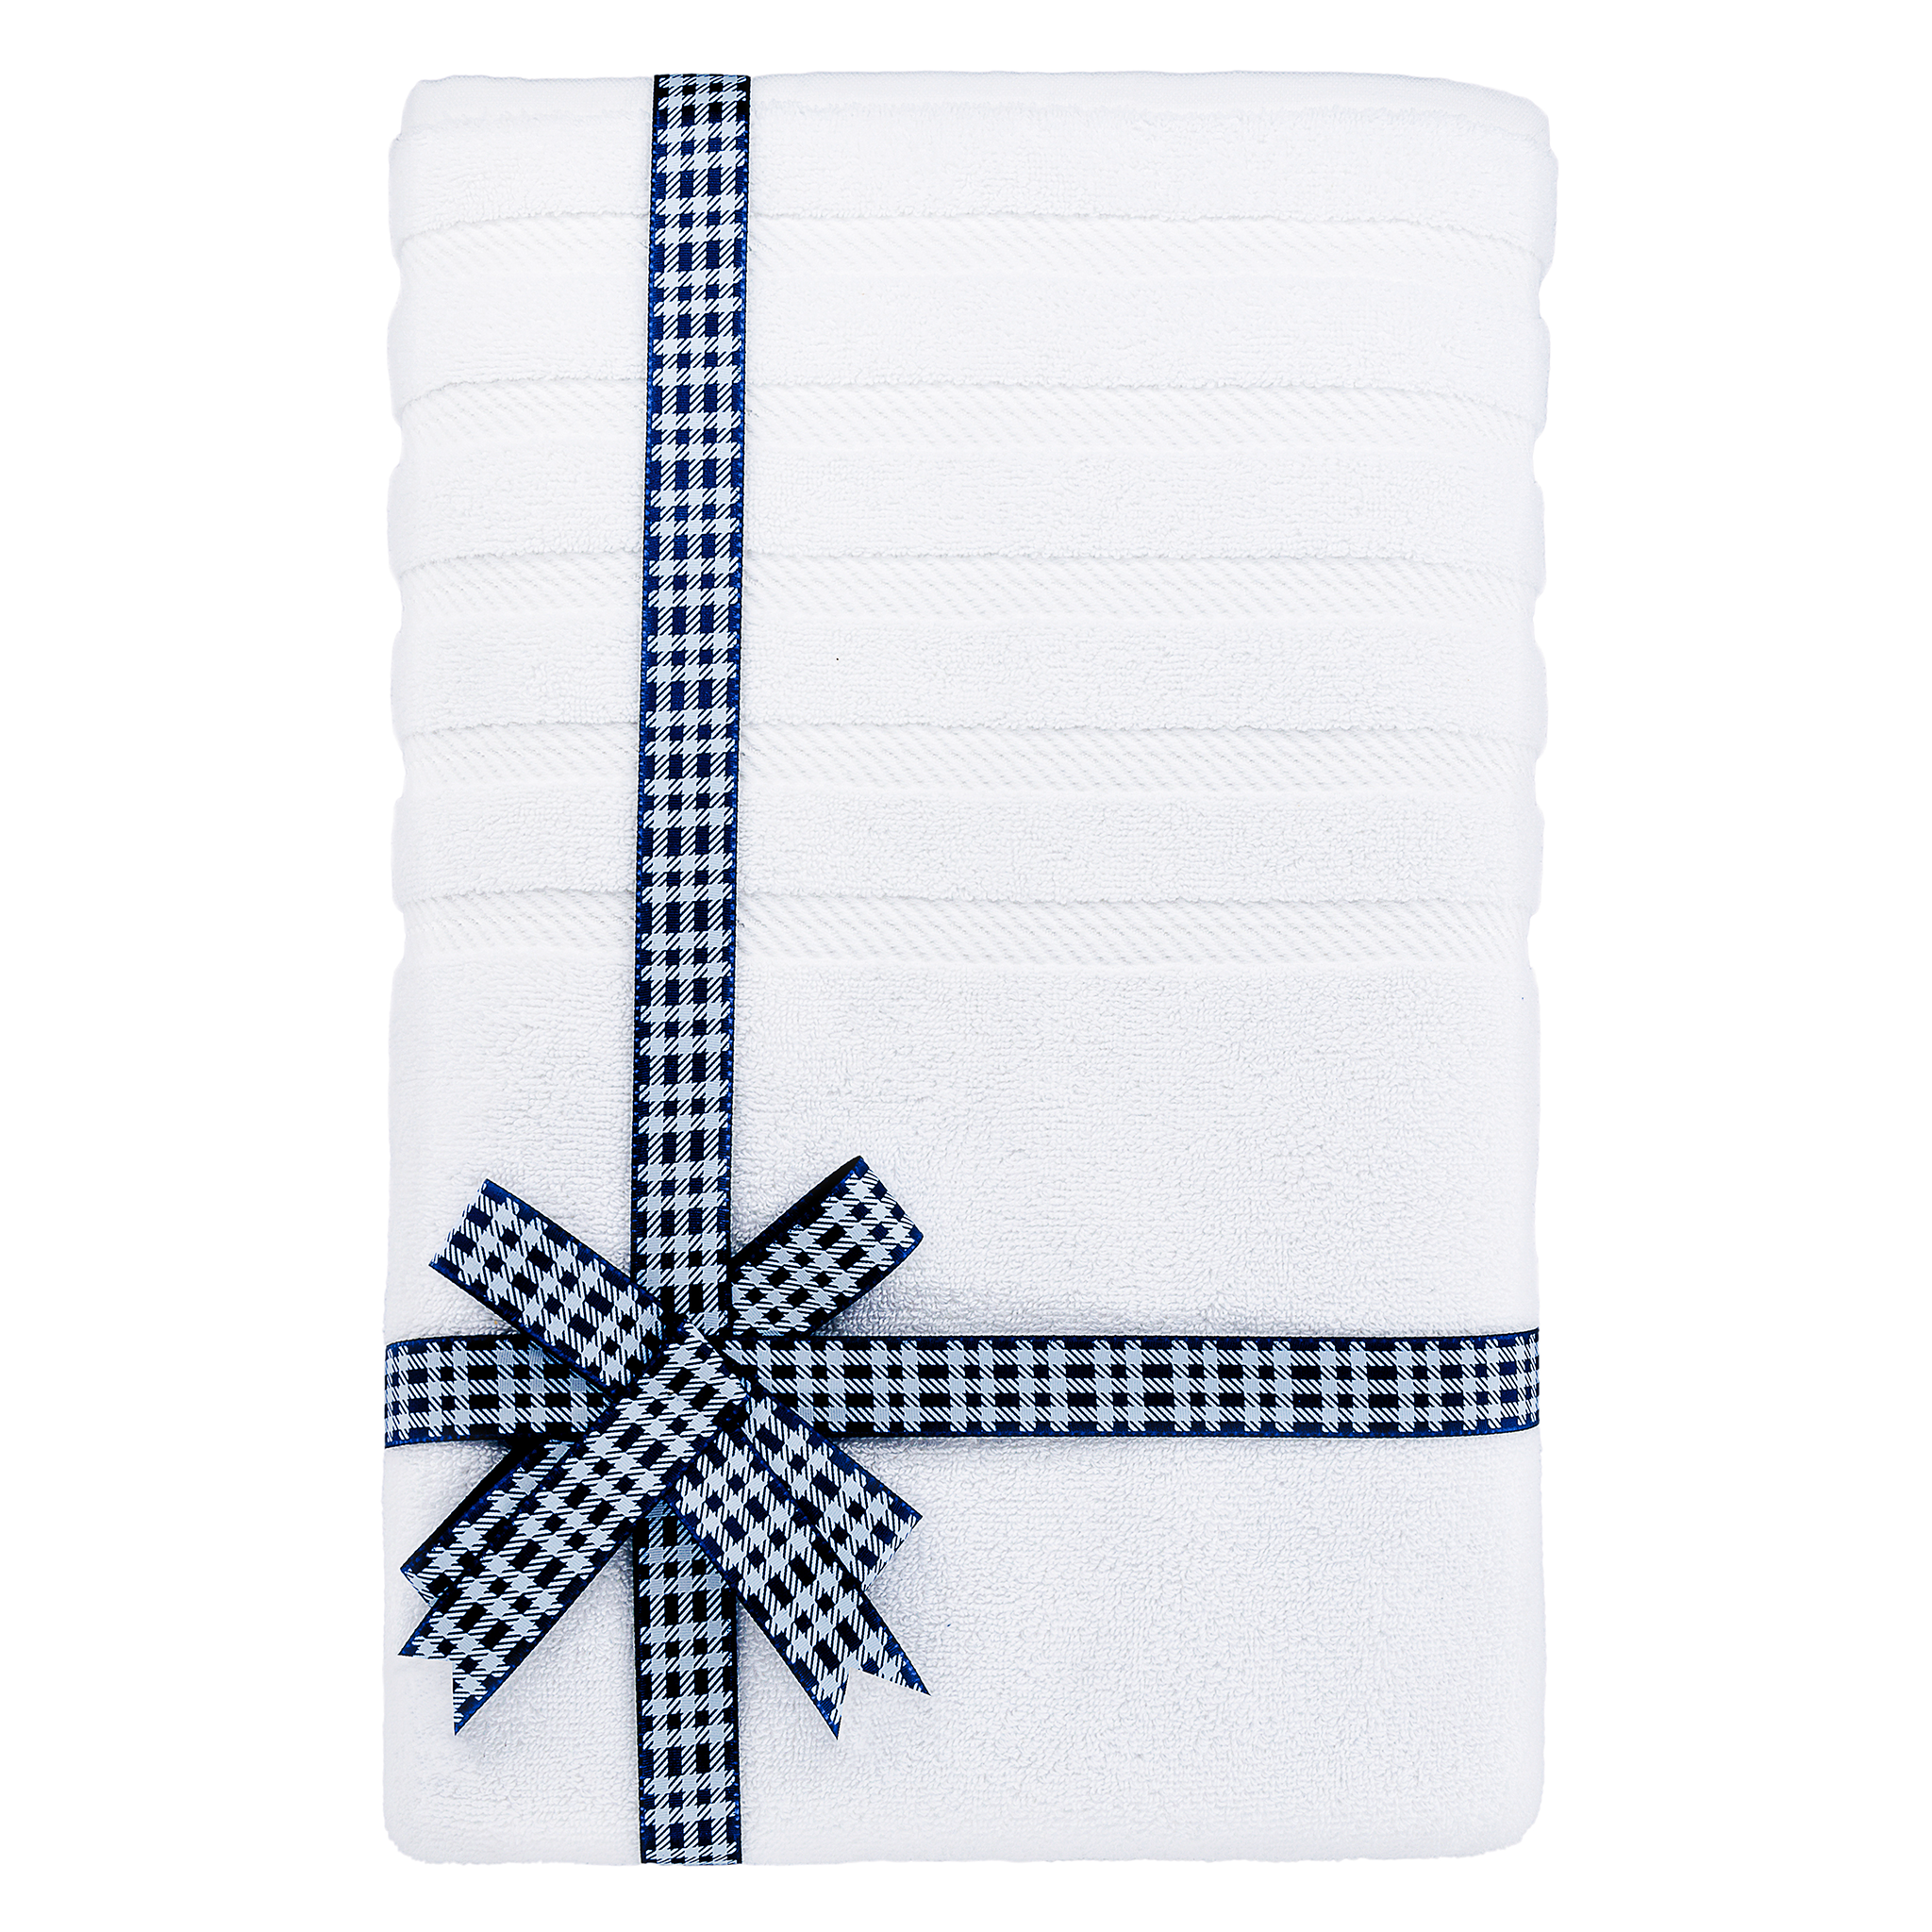 American Soft Linen - 35x70 Jumbo Bath Sheet Turkish Bath Towel - 16 Piece Case Pack - White - 3